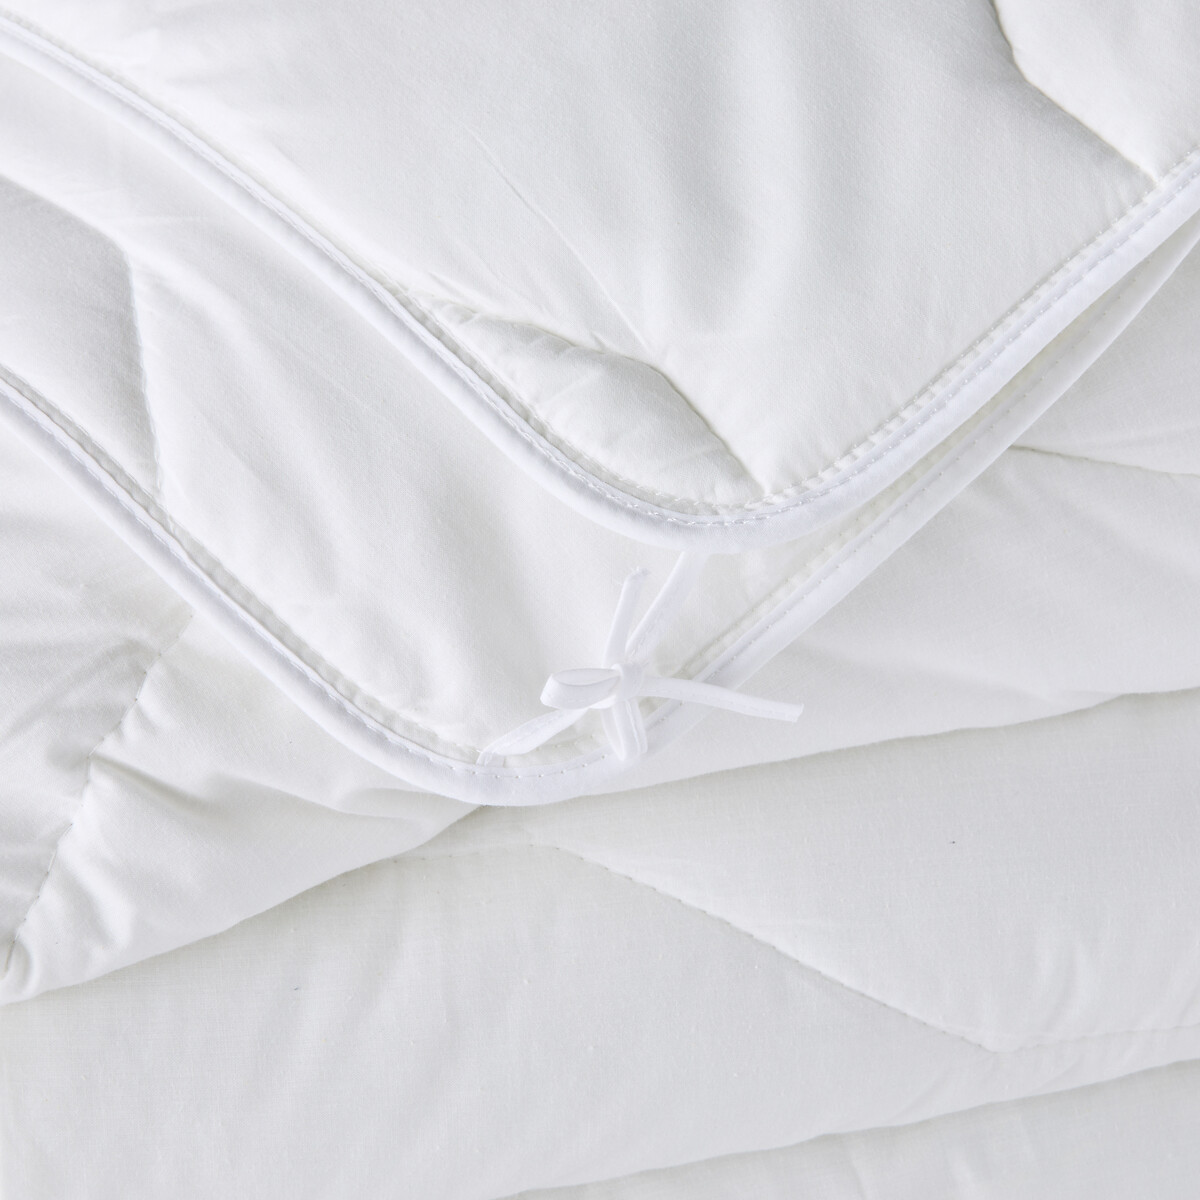 Одеяло La Redoute Двойное Pratique  сезона  полиэстер 200 x 200 см белый, размер 200 x 200 см - фото 3